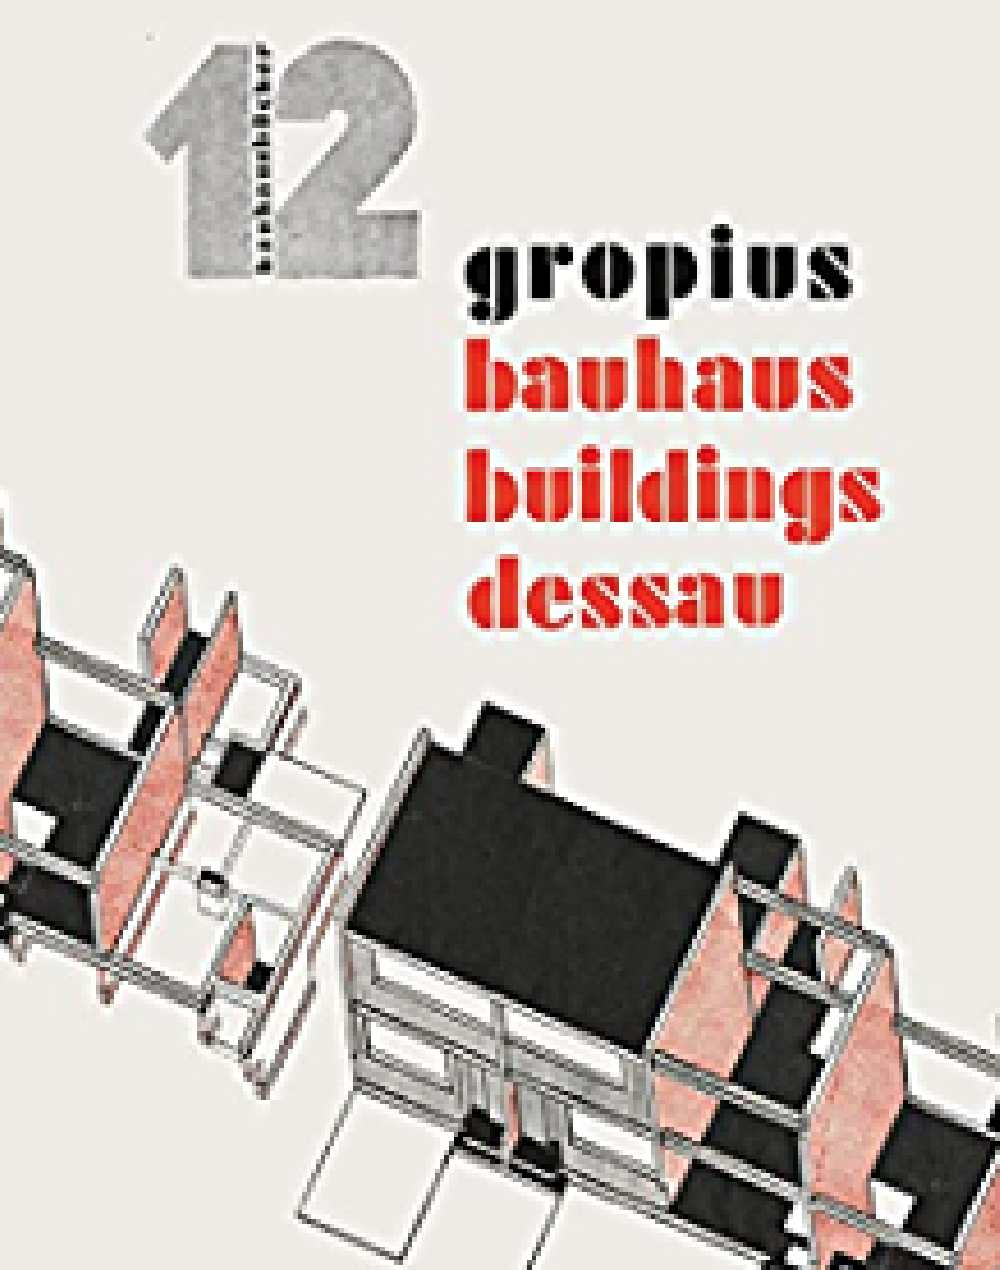 Walter Gropius Bauhaus Buildings Dessau